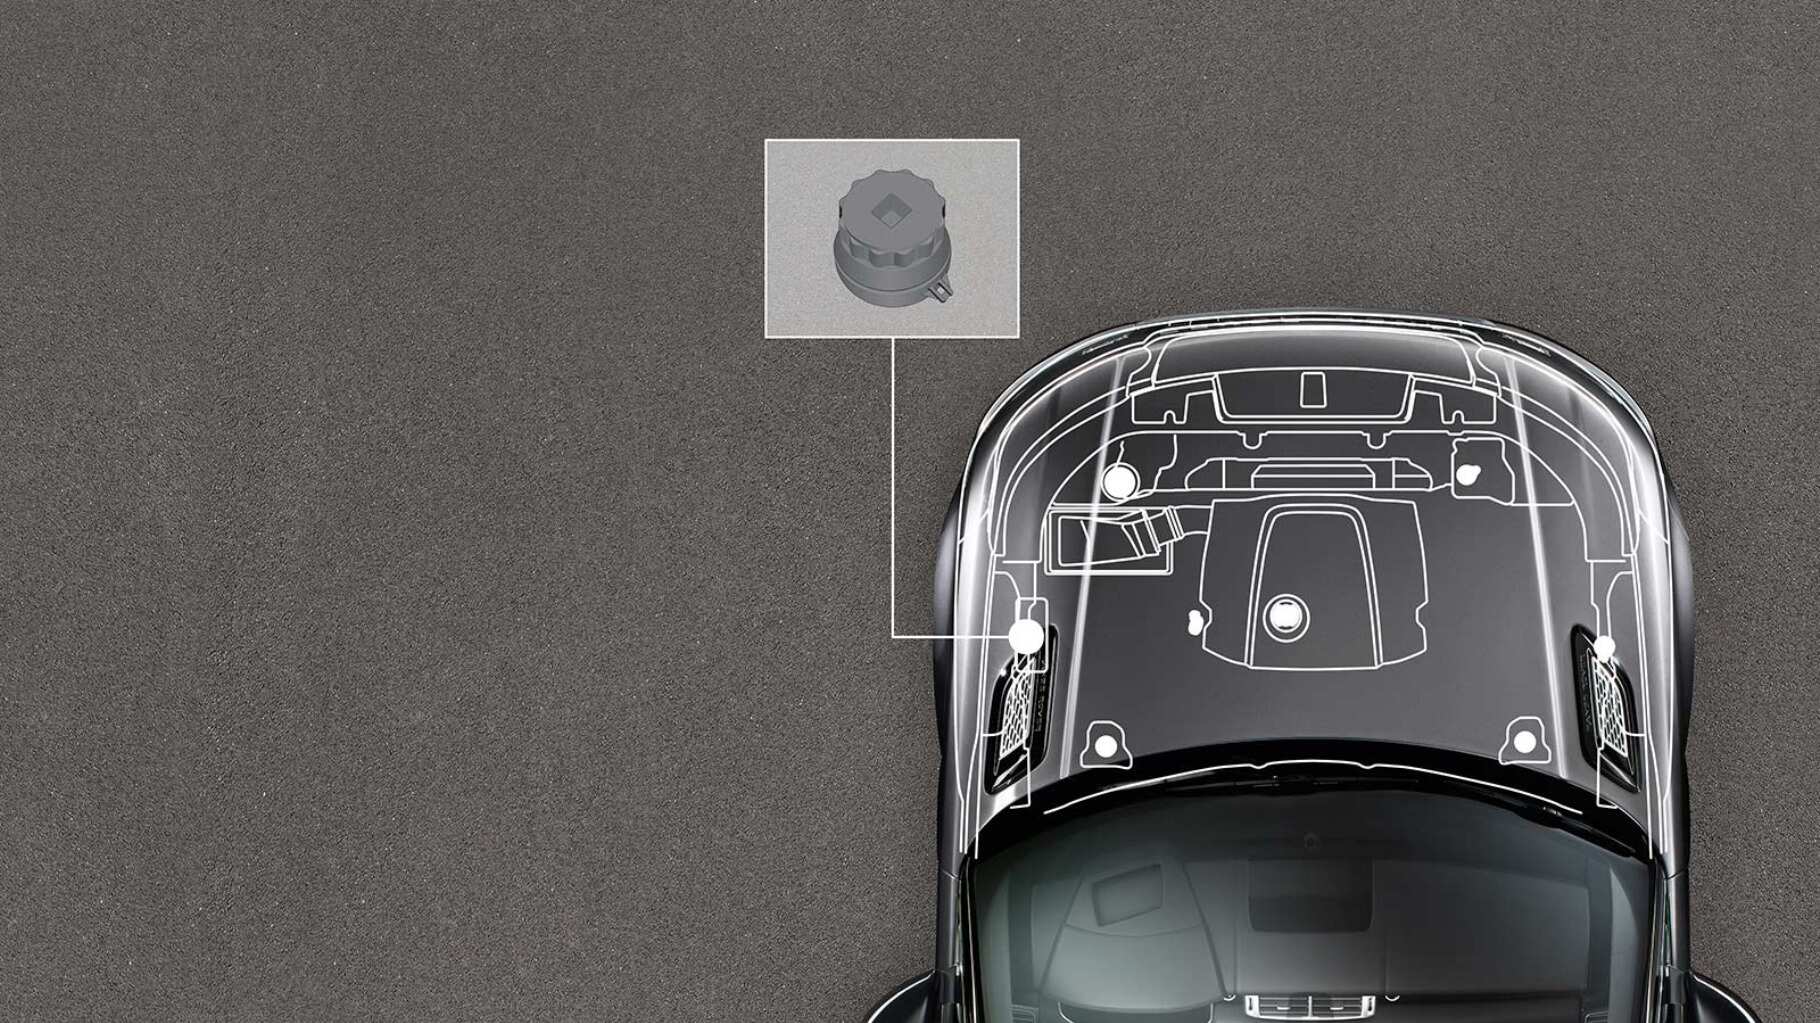 Diesel Exhaust Fluid reservoir filler cap location in a Range Rover Sport.